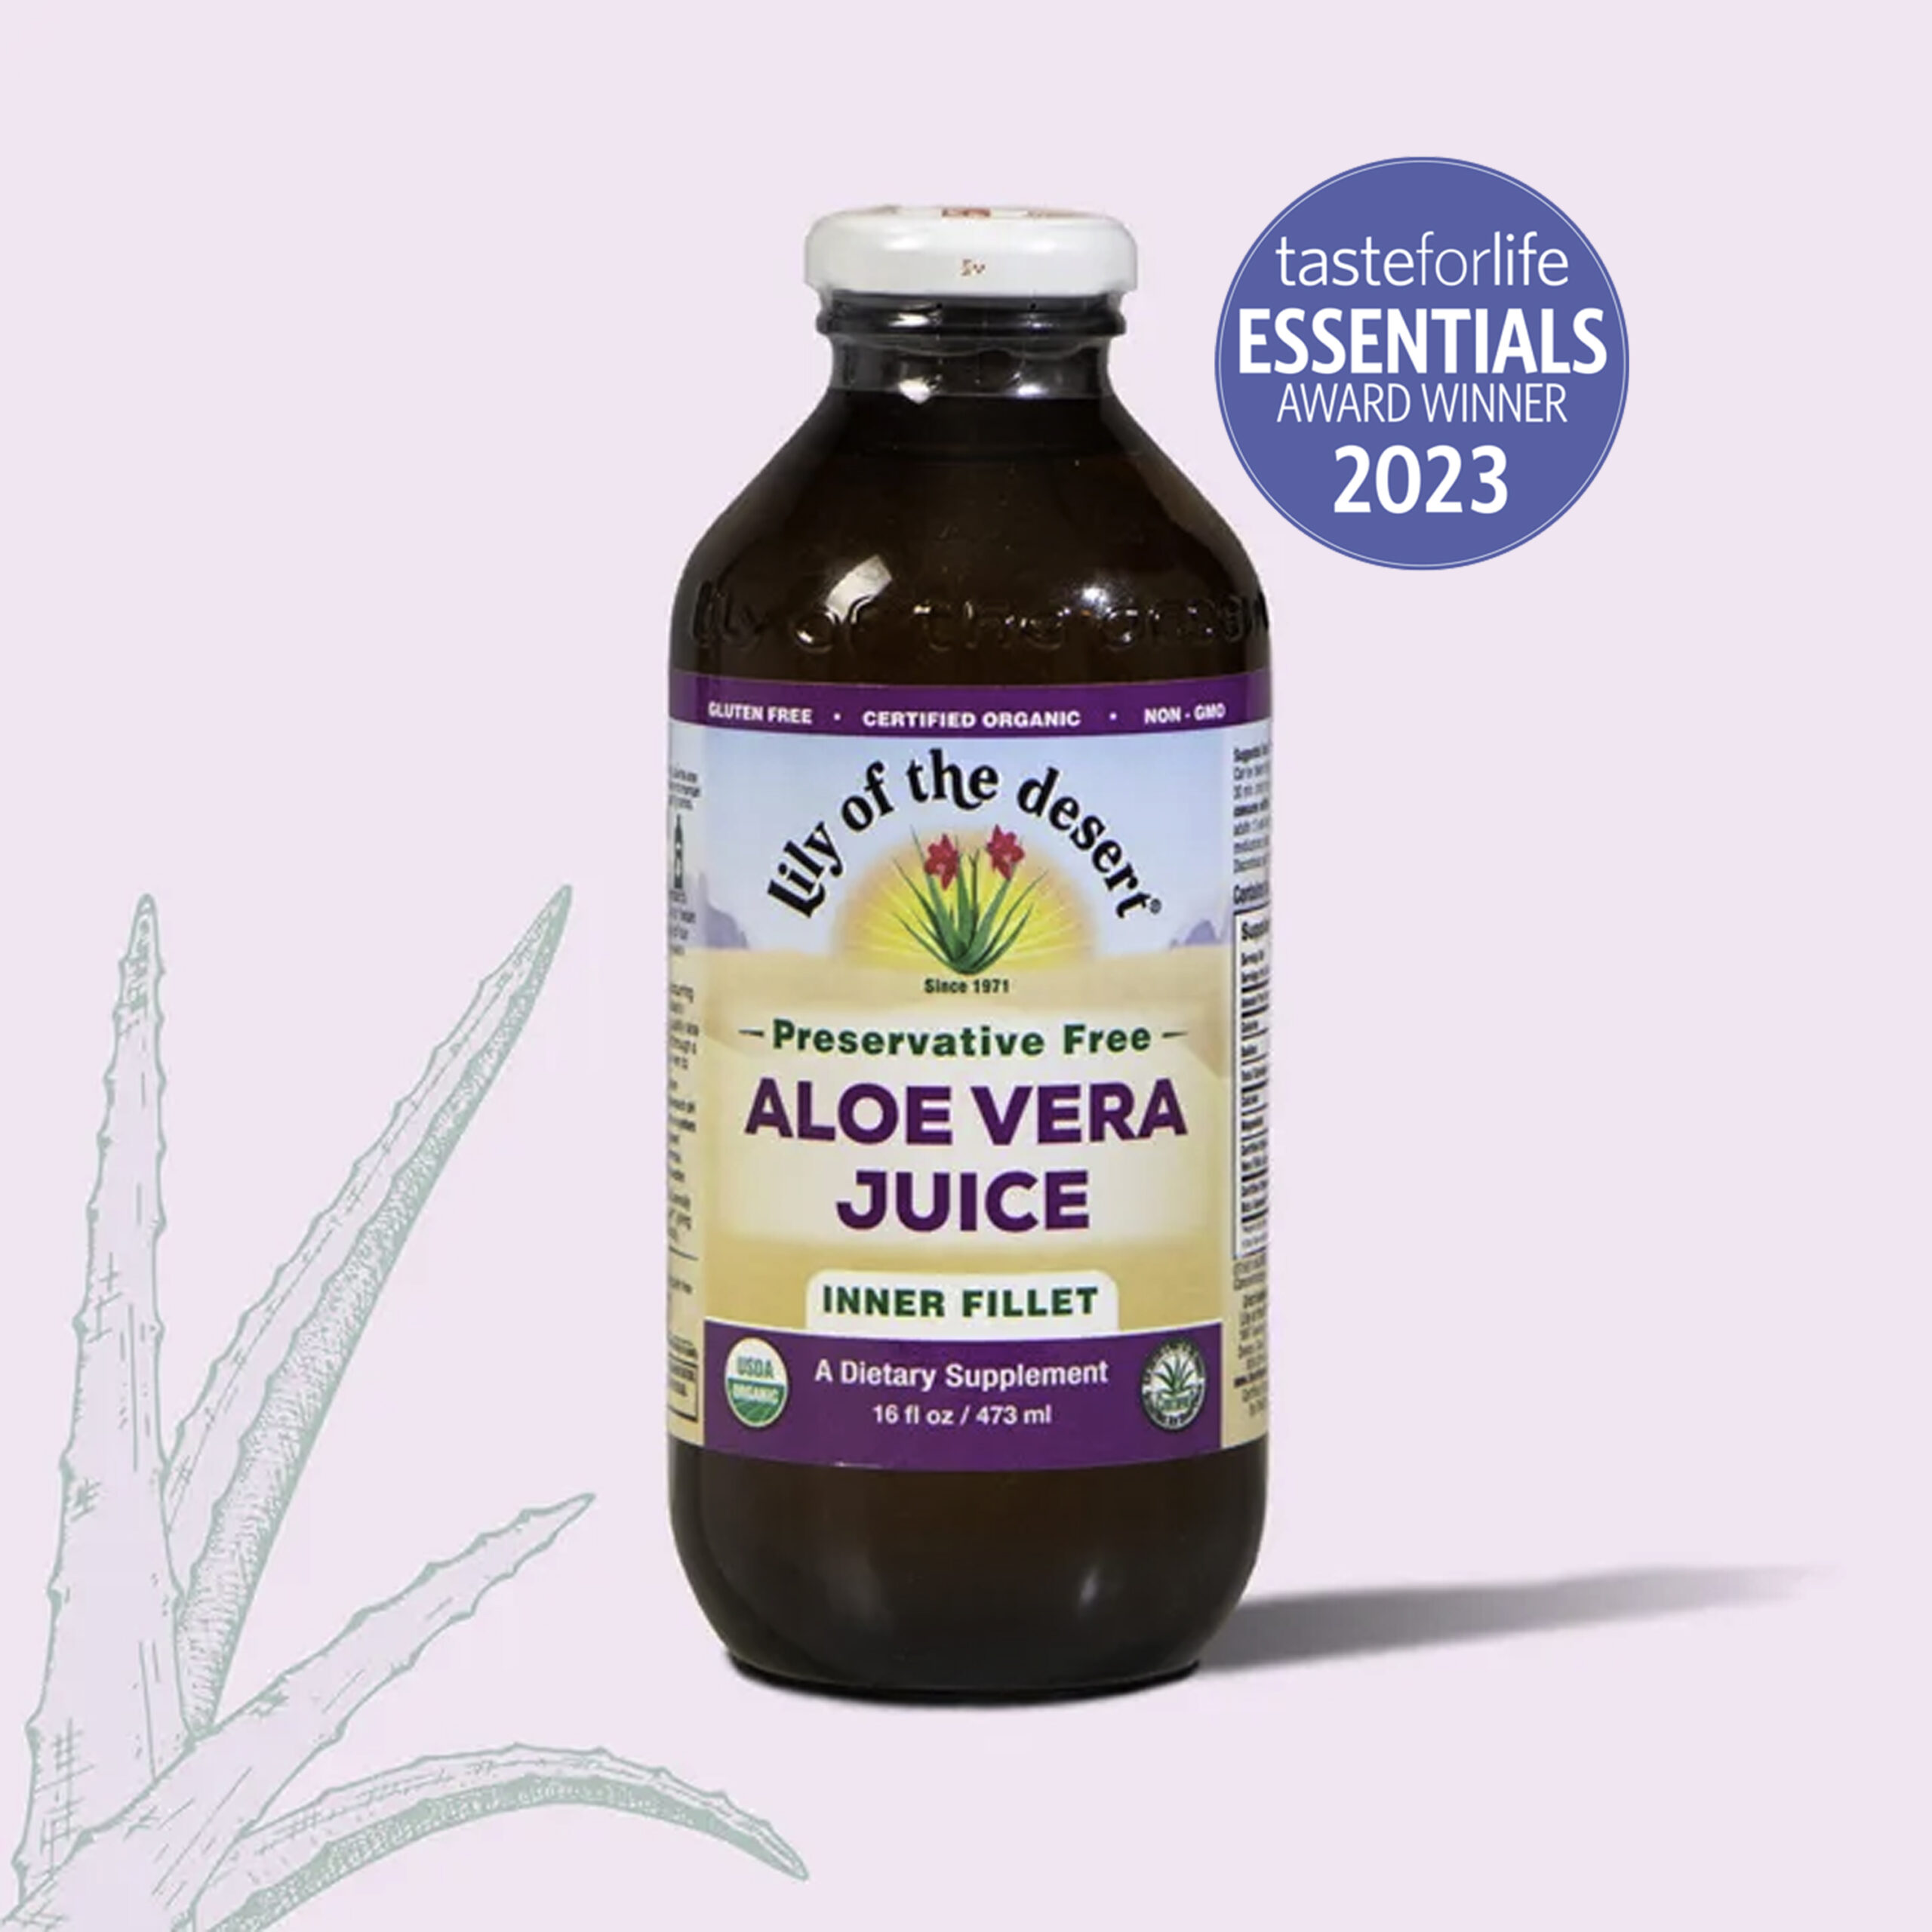 Lily of the Desert's aloe vera juice is a tasteforlife essentials award winner 2023